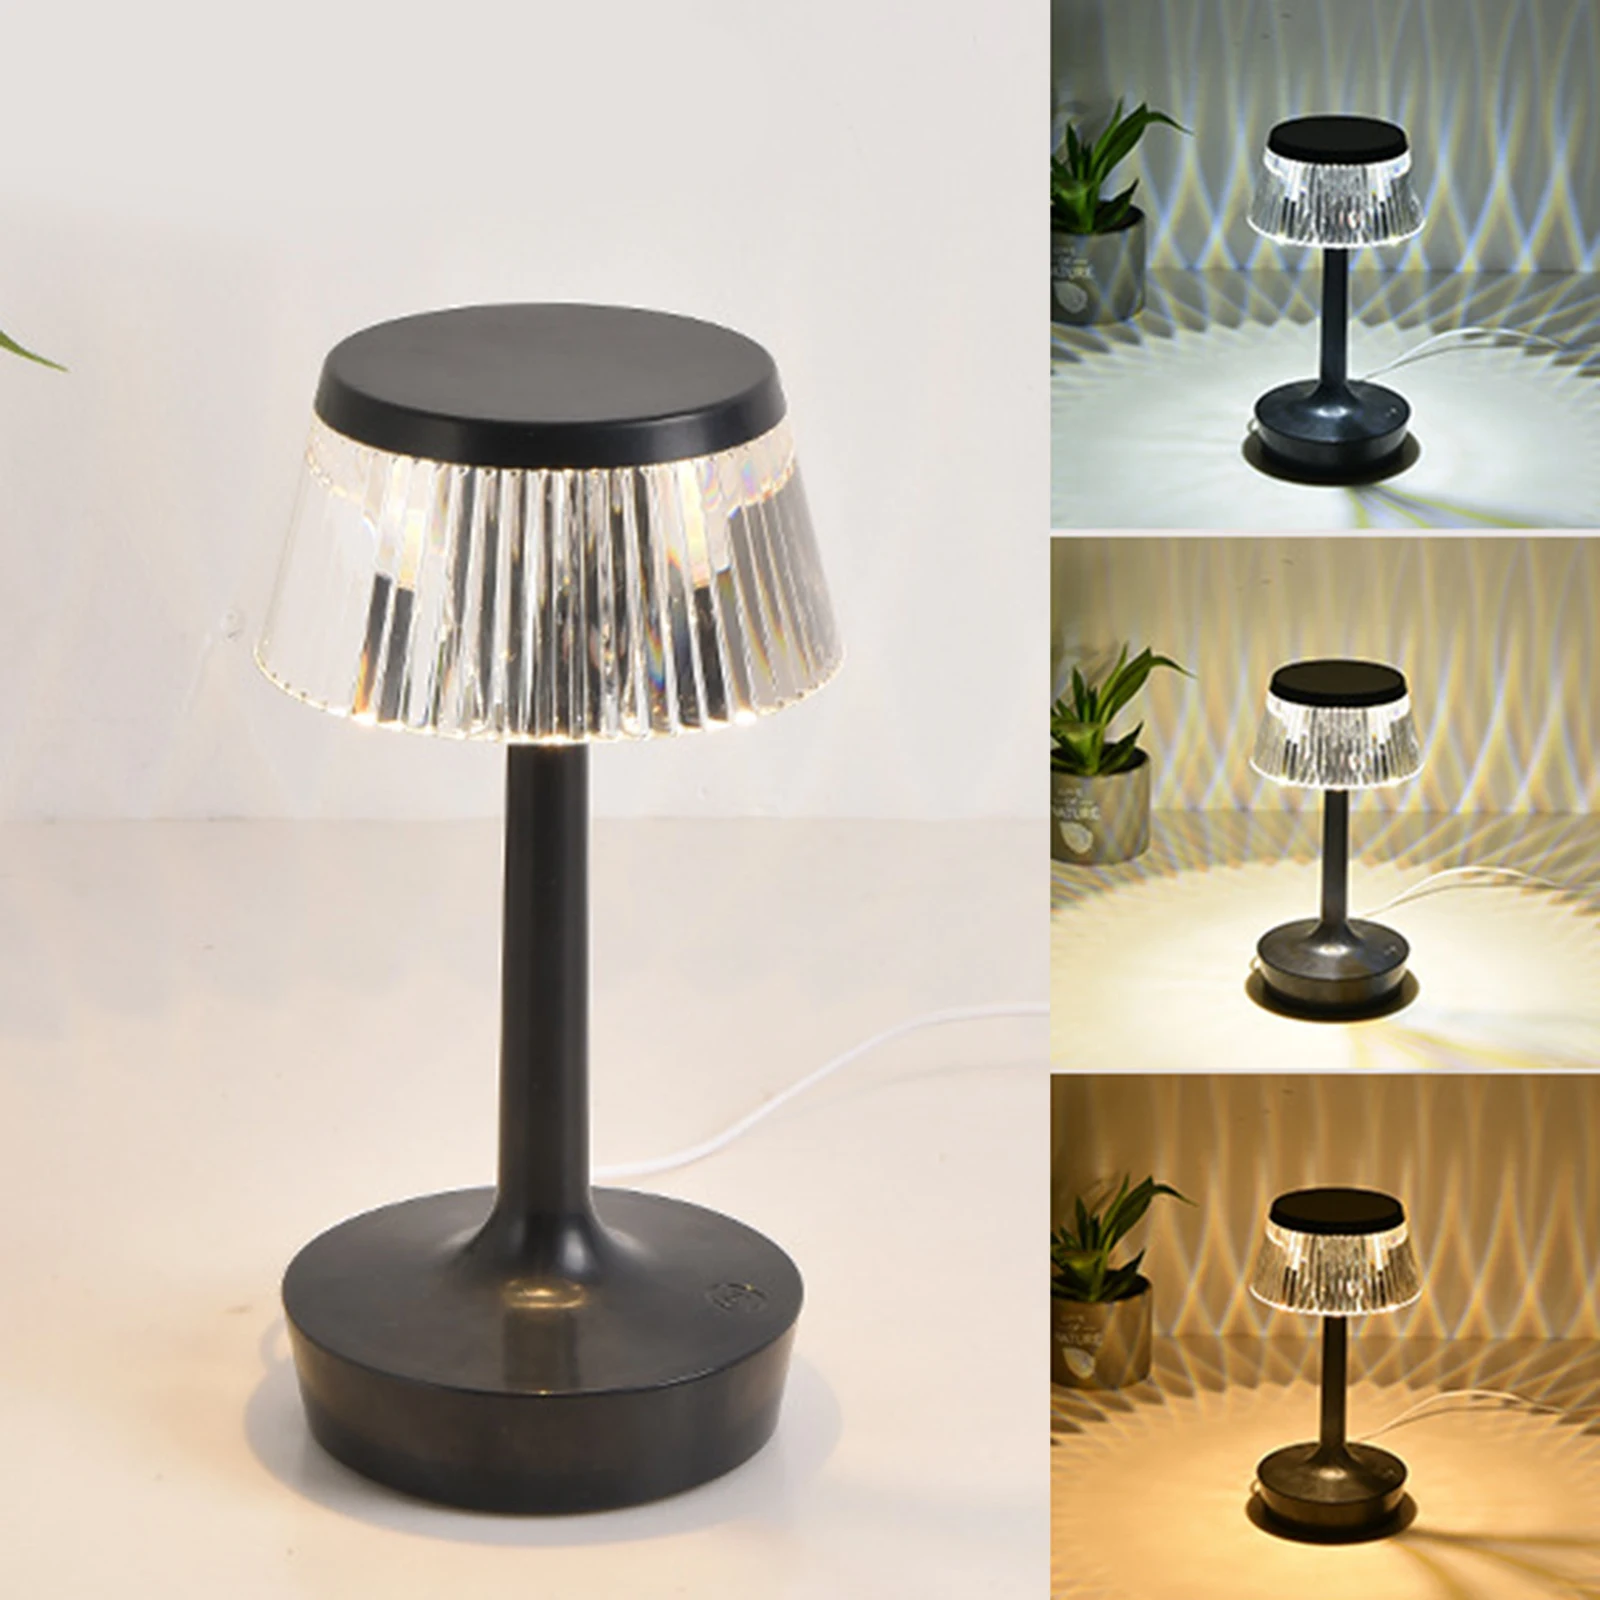 Mushroom Table Lamp Bedroom Nightstand Lamp USB Crystal Modern Bedside Desk Light for Living Room Dorm Home Office Decor Gift